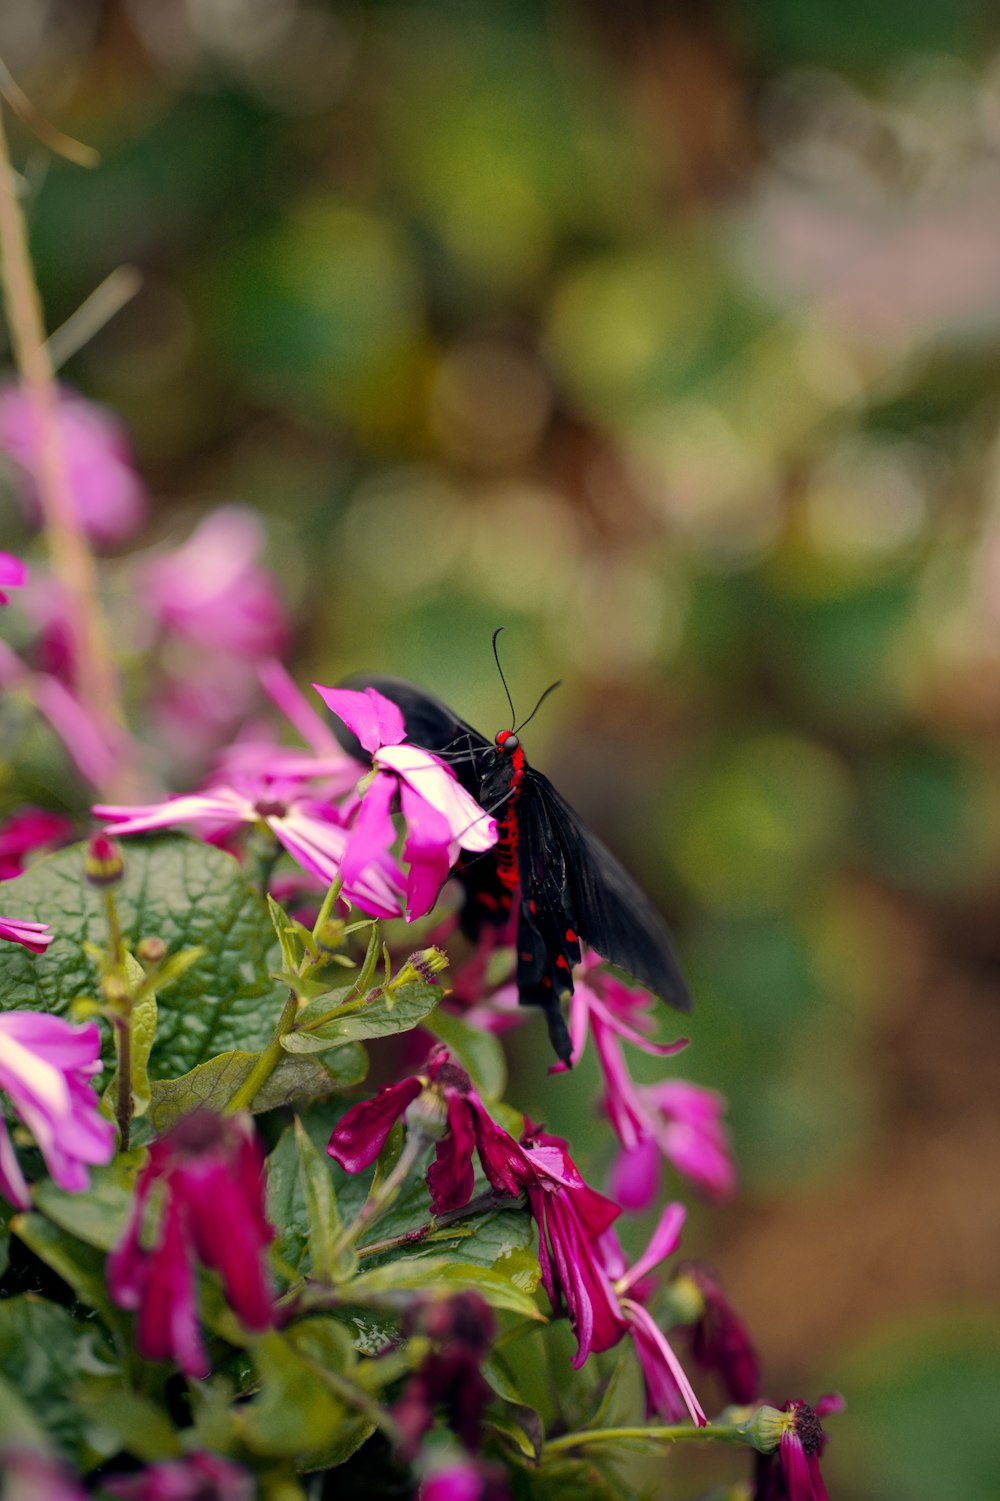 una mariposa negra y roja sentada sobre una flor rosa